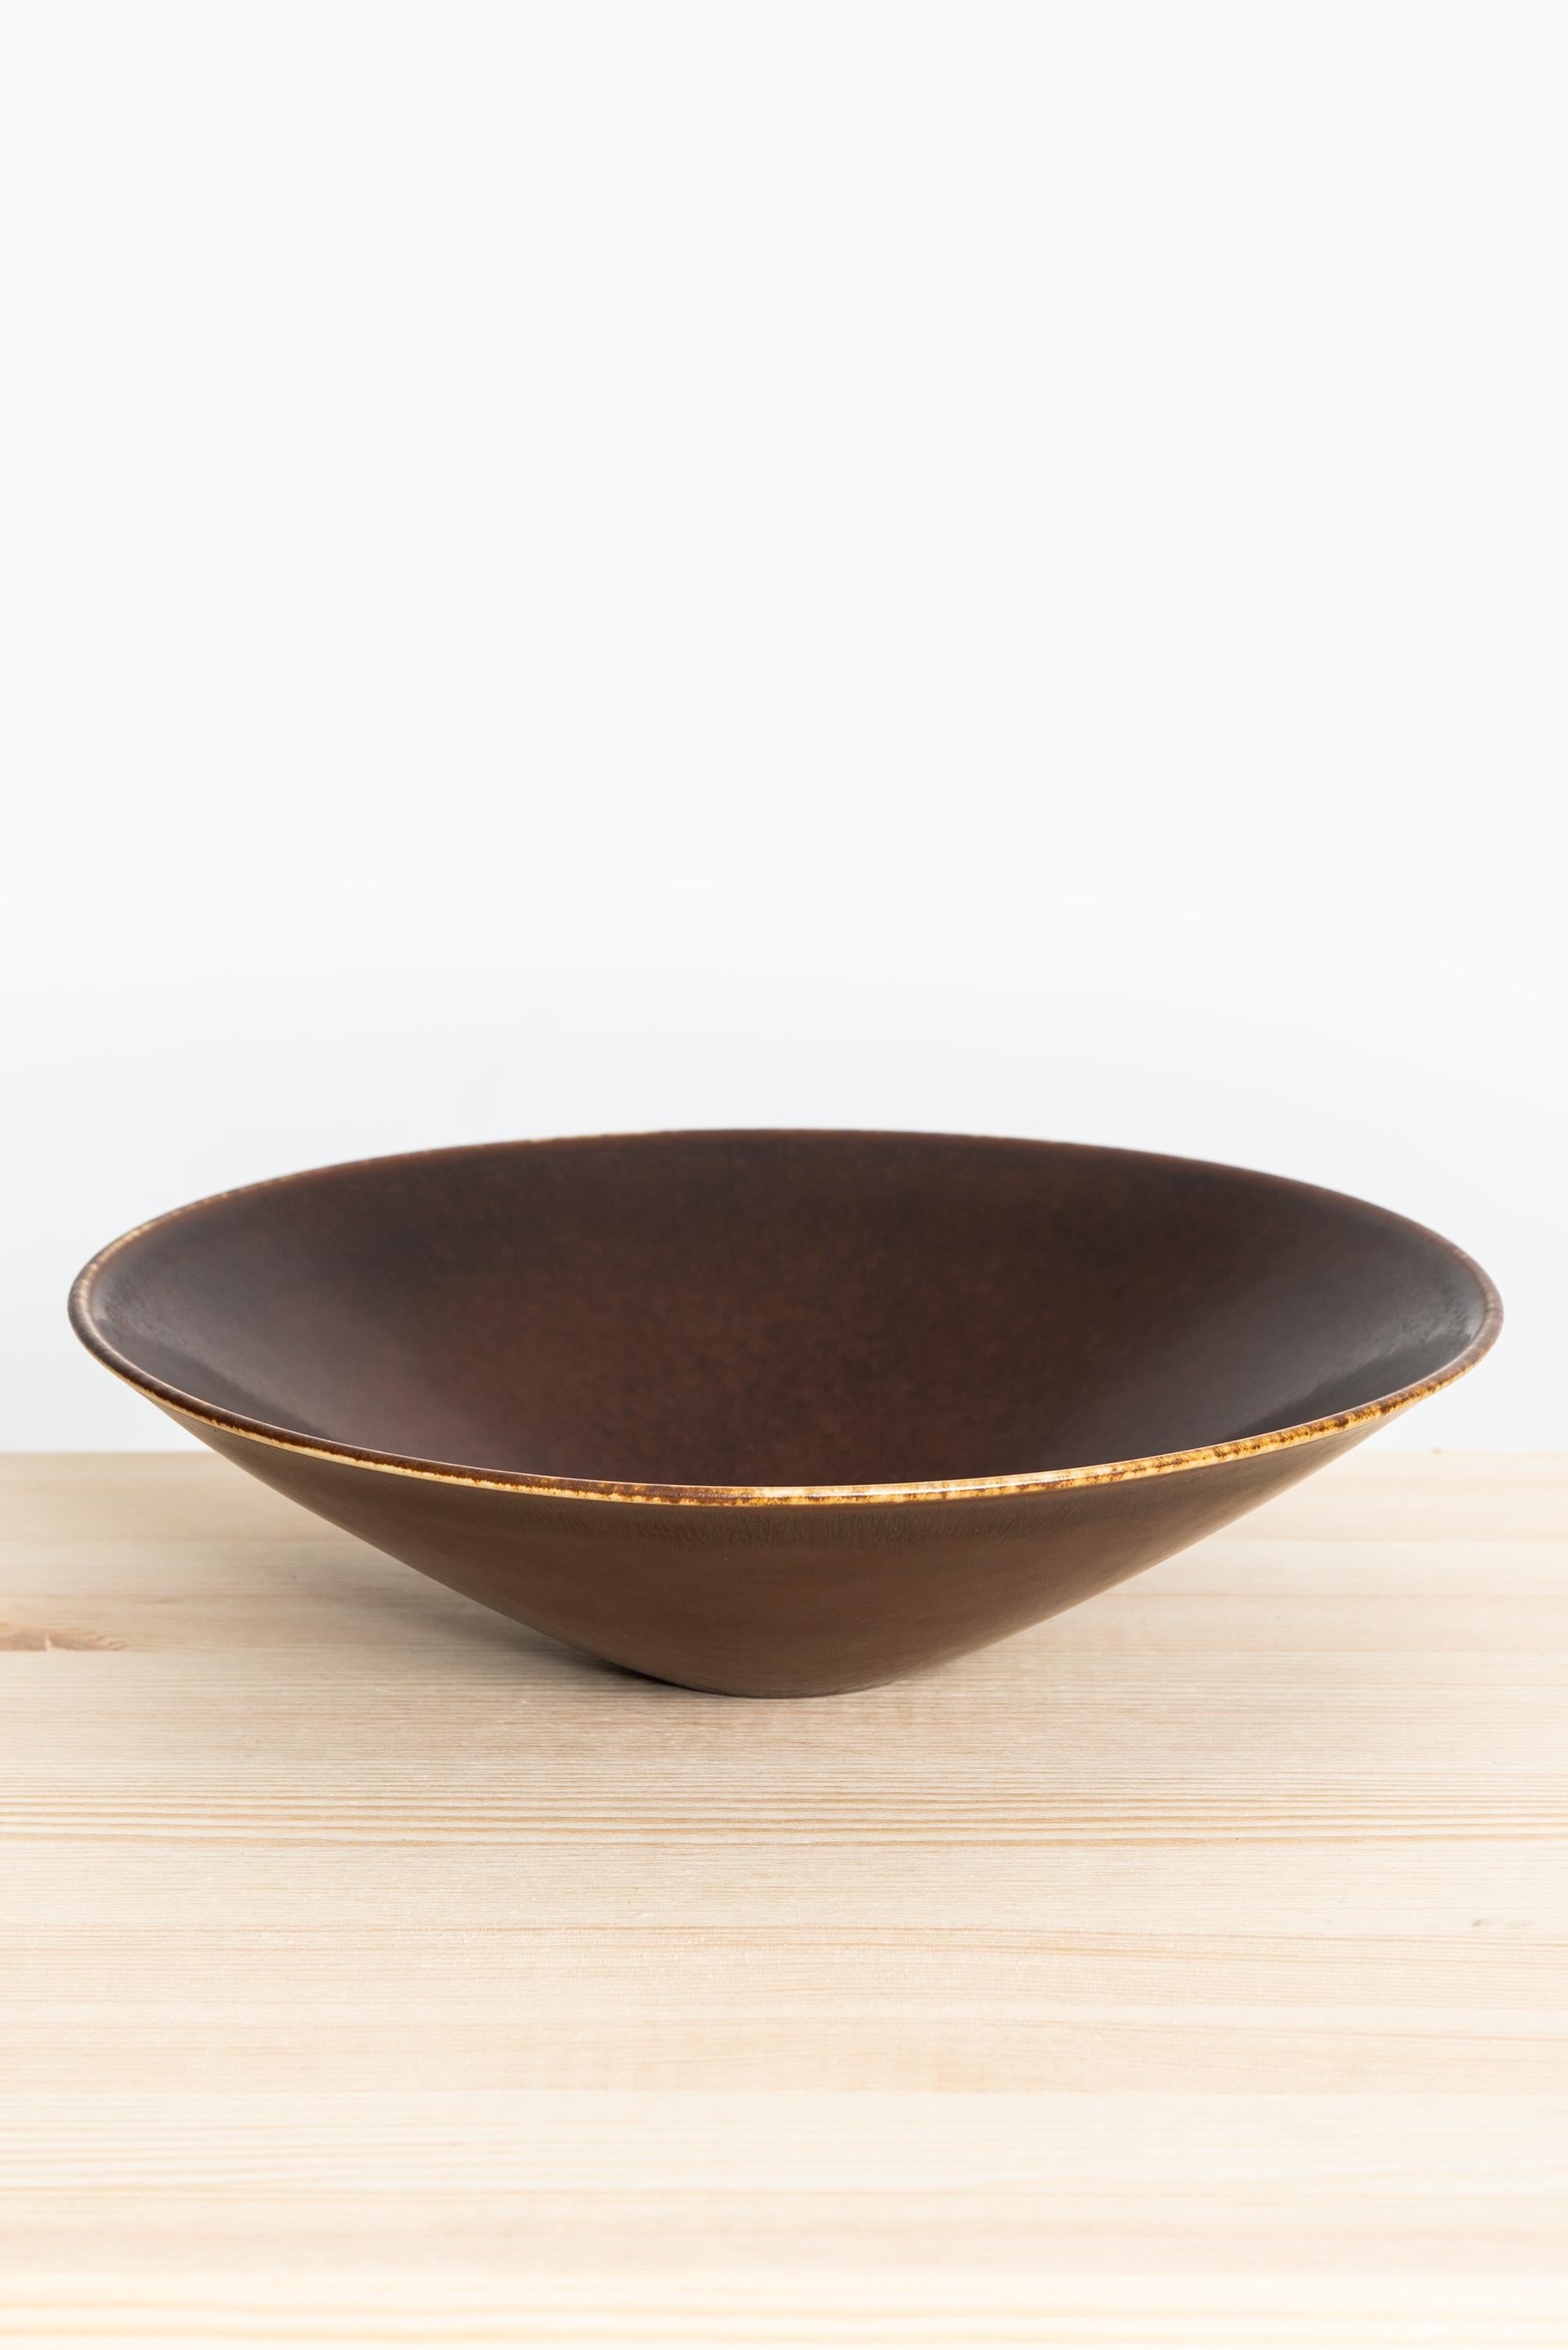 Ceramic bowl designed by Carl-Harry Stålhane. Produced by Rörstrand in Sweden.